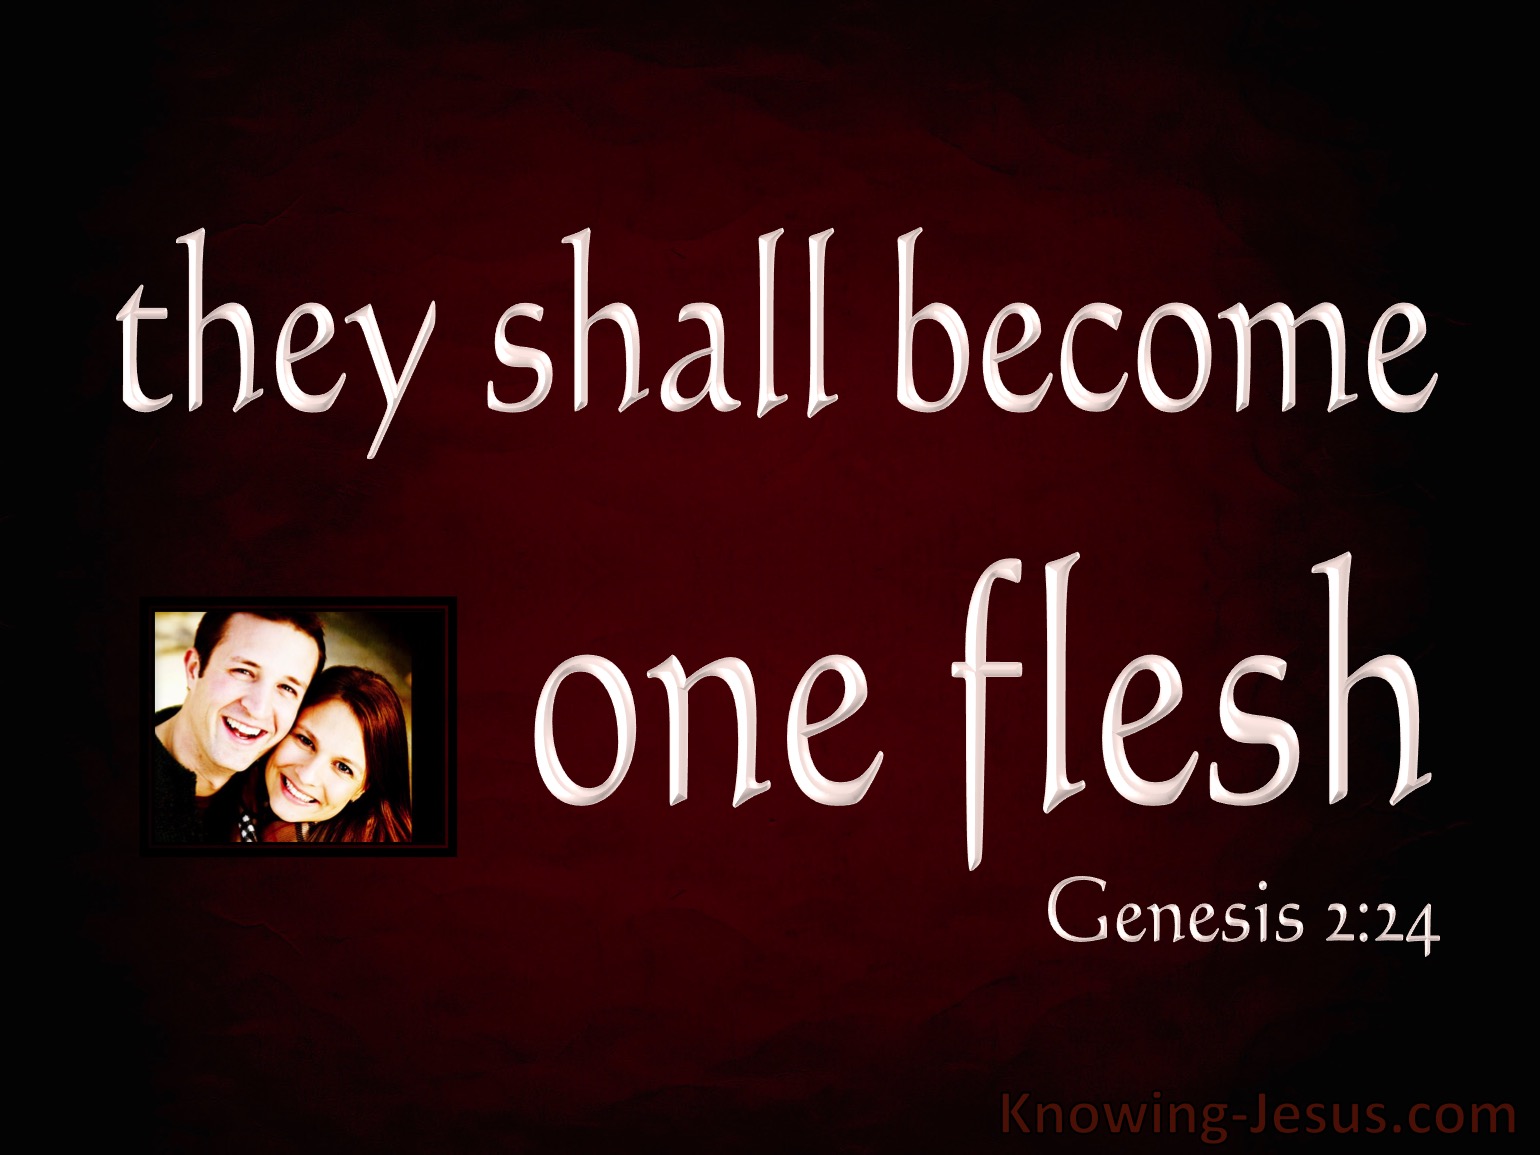 What Does Genesis 2:24 Mean?